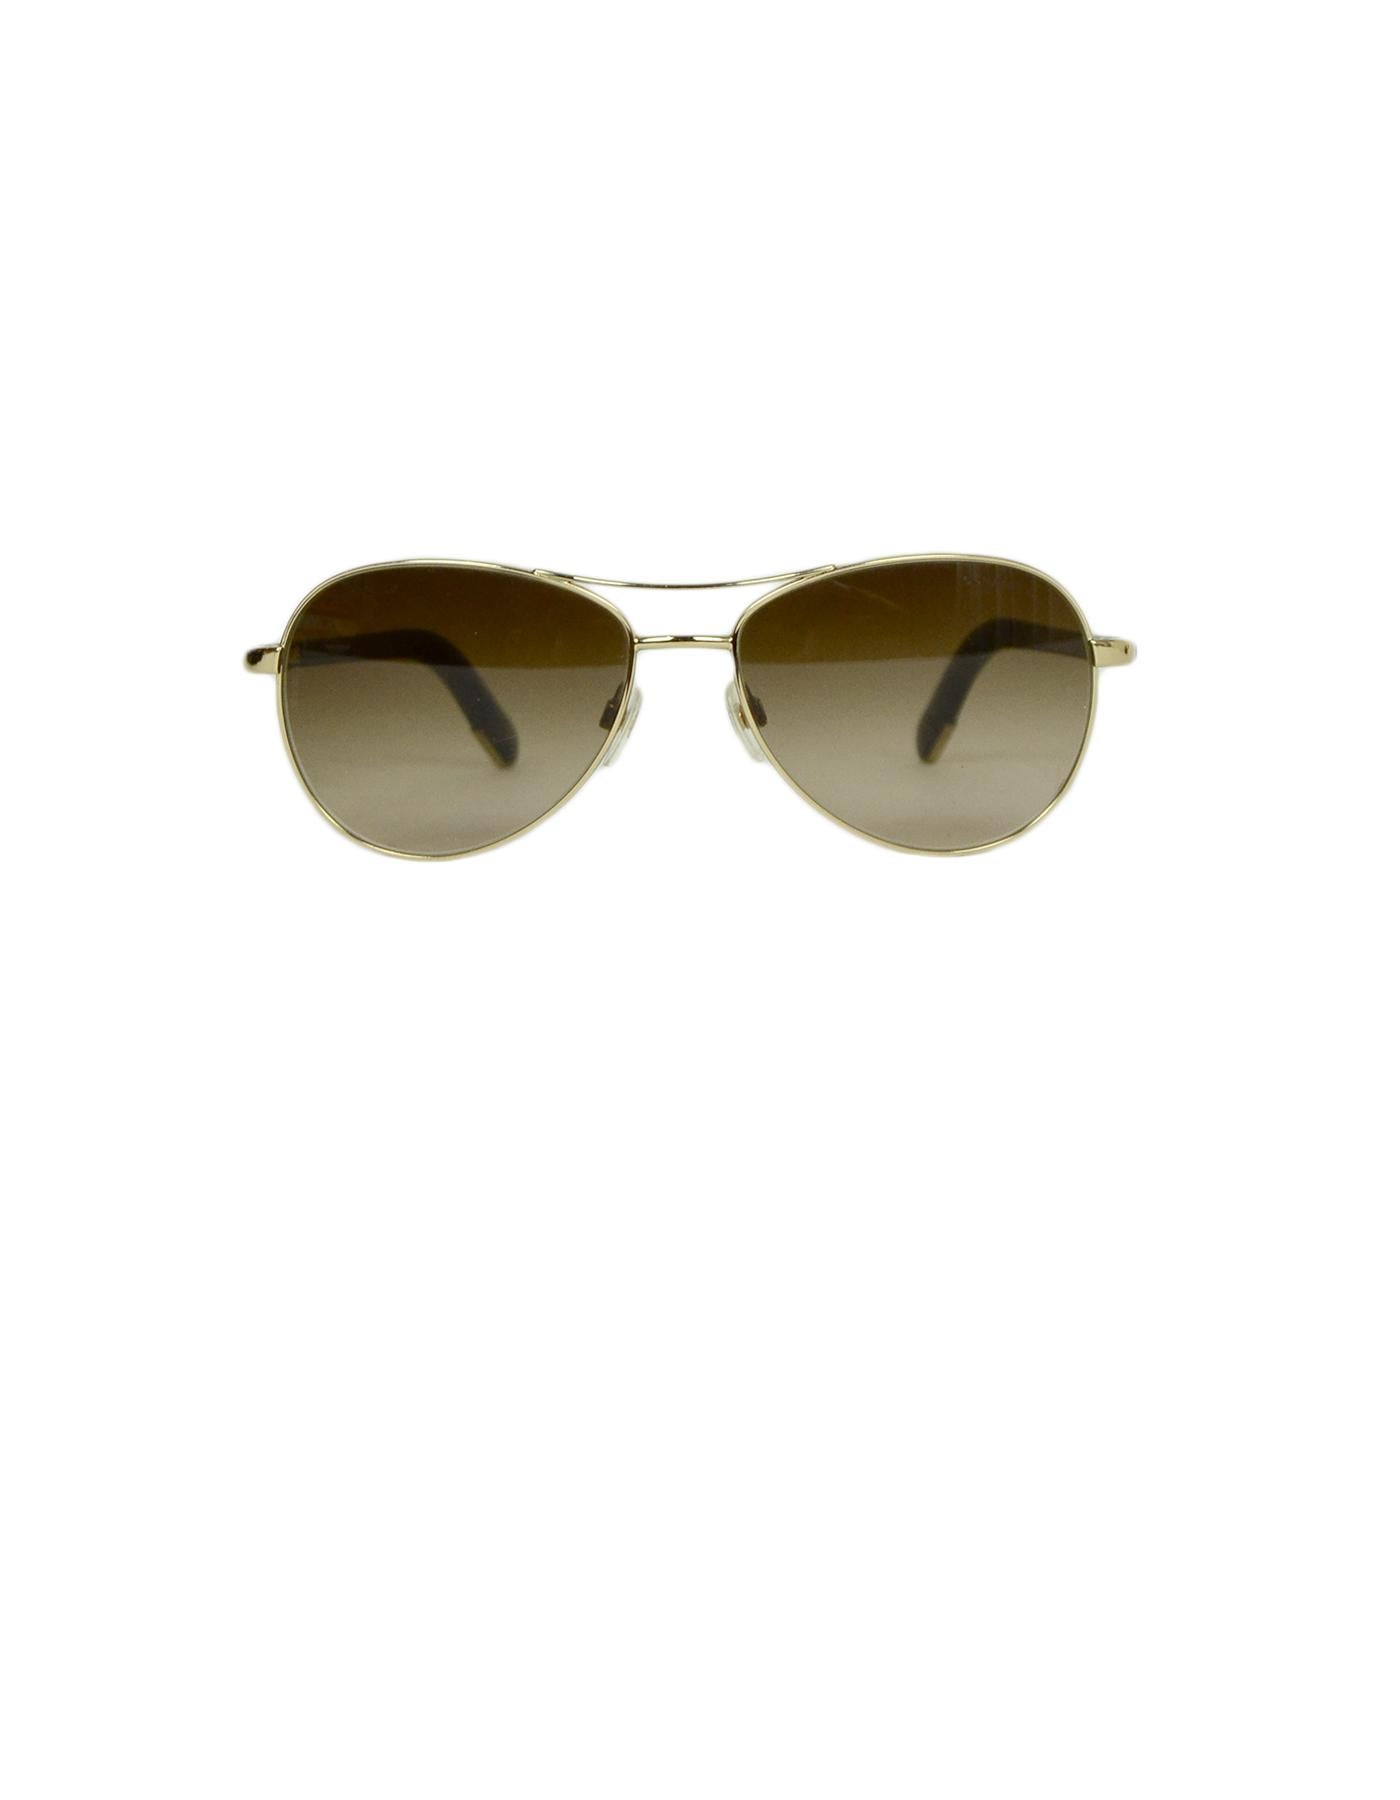 Chanel Brown Gold Aviator Sunglasses  2